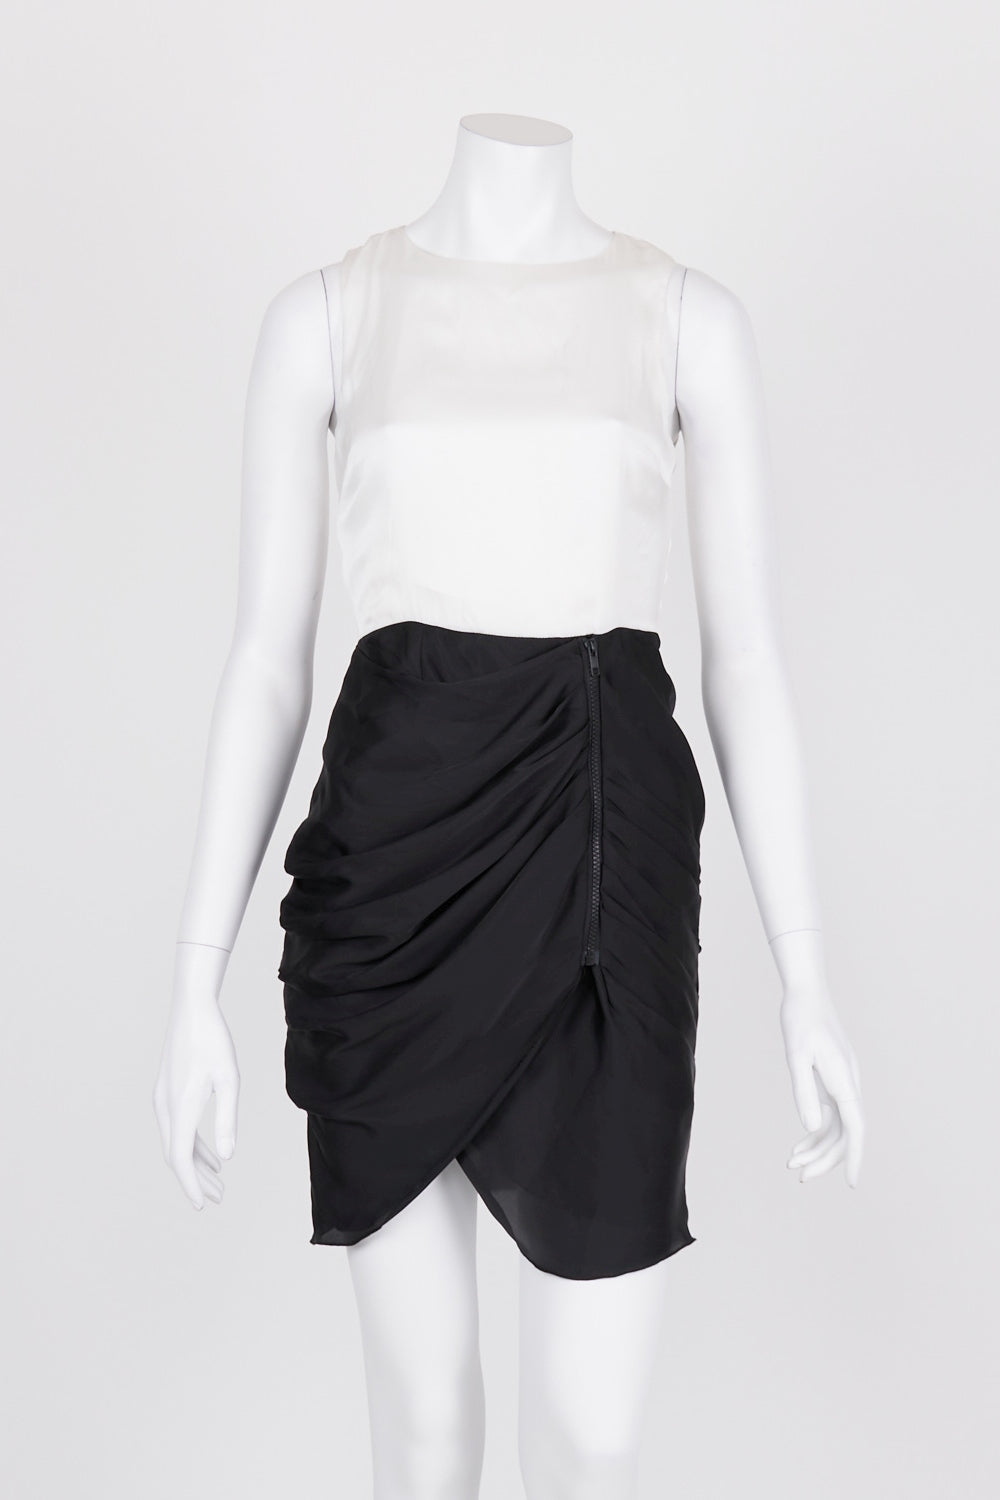 BCBGMAXAZRIA Black And White Ruched Side Silk Dress S